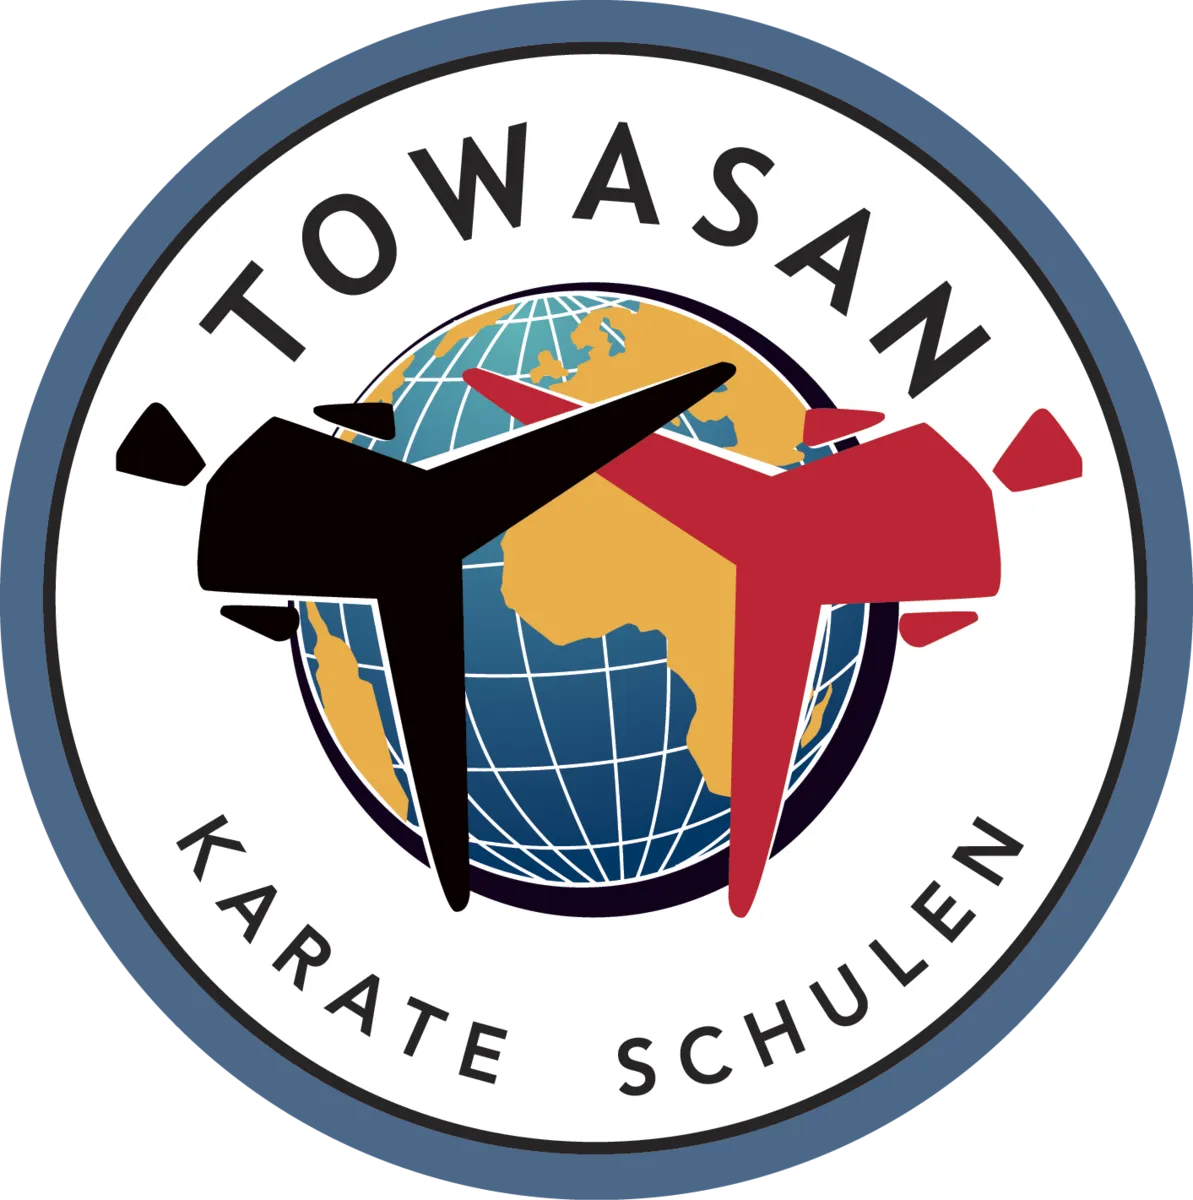 TOWASAN Karateschulen